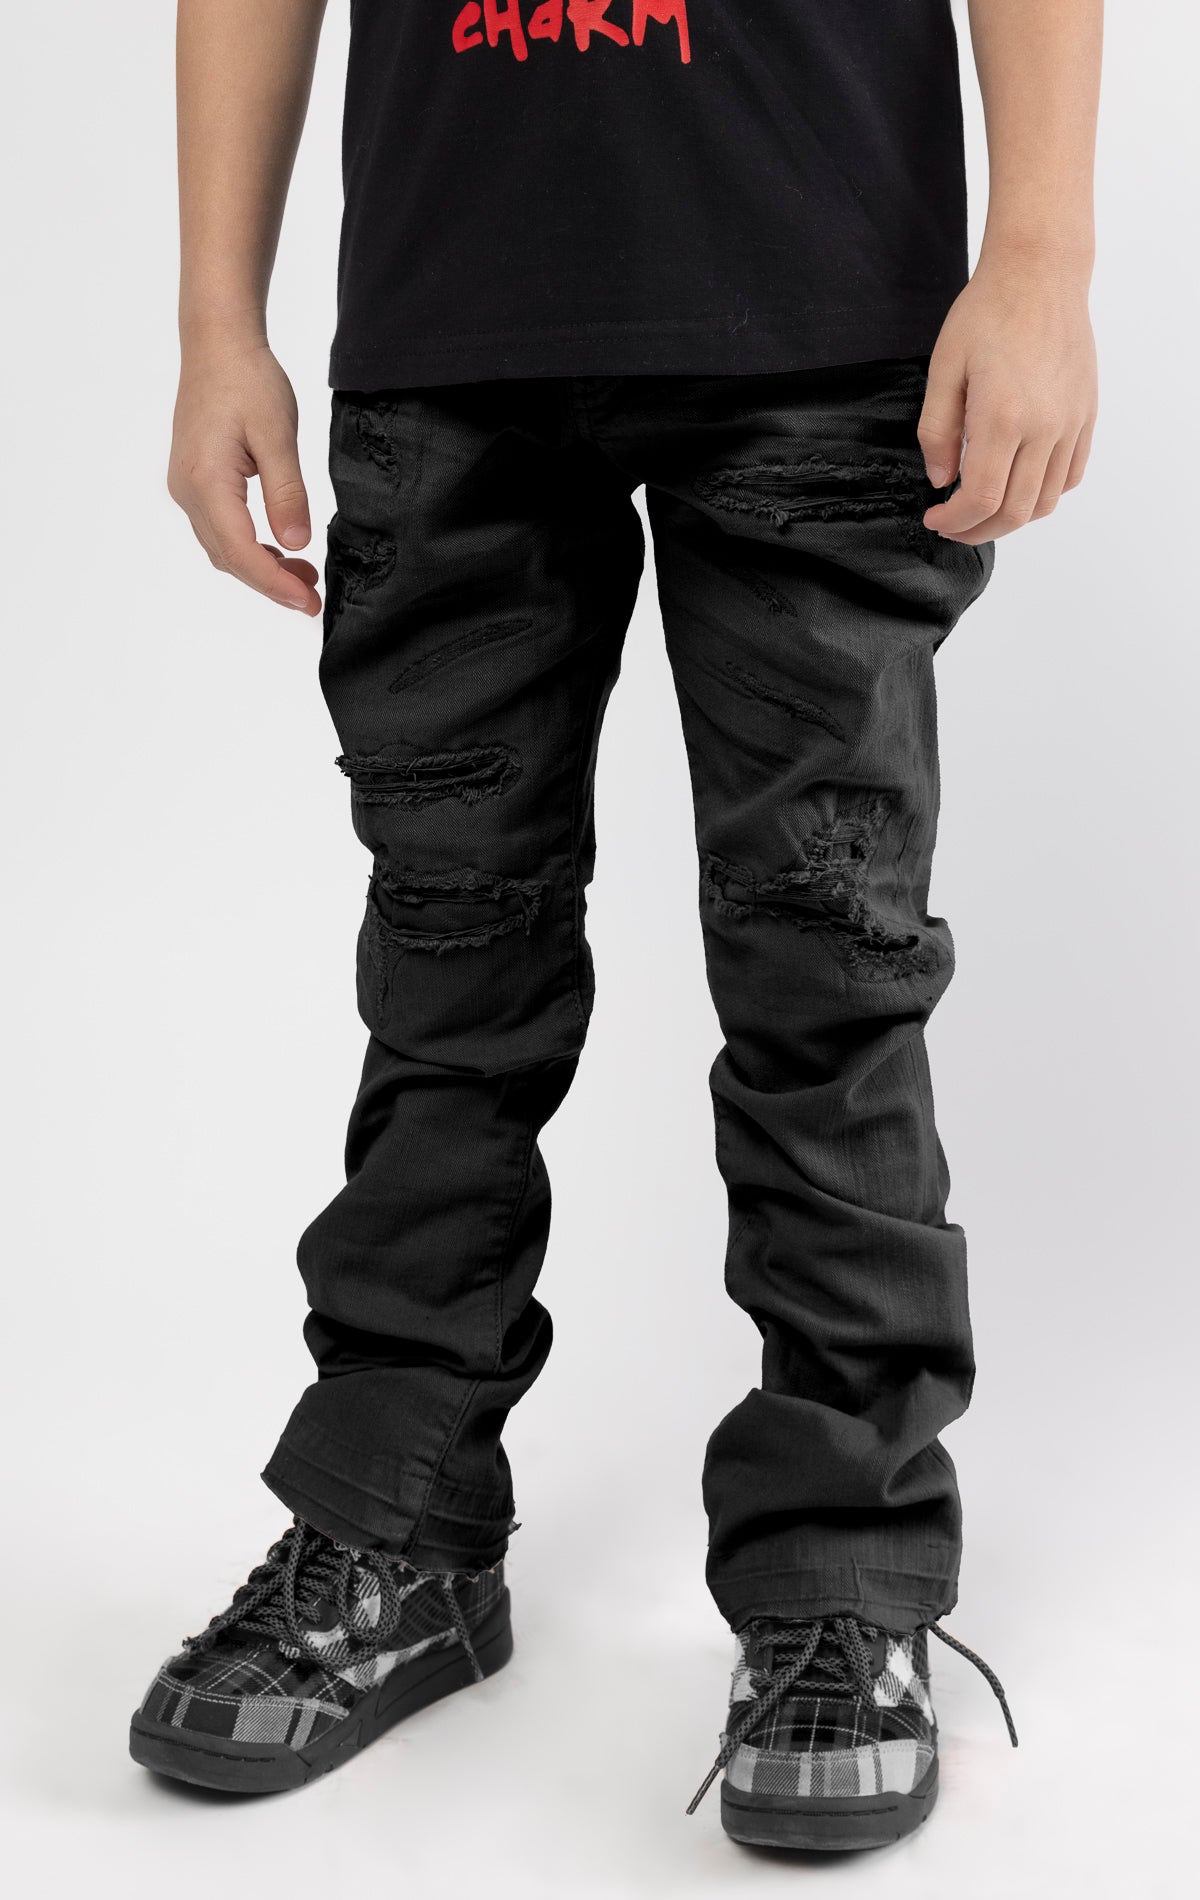 Black Extended length flare pants for maximum stacks.